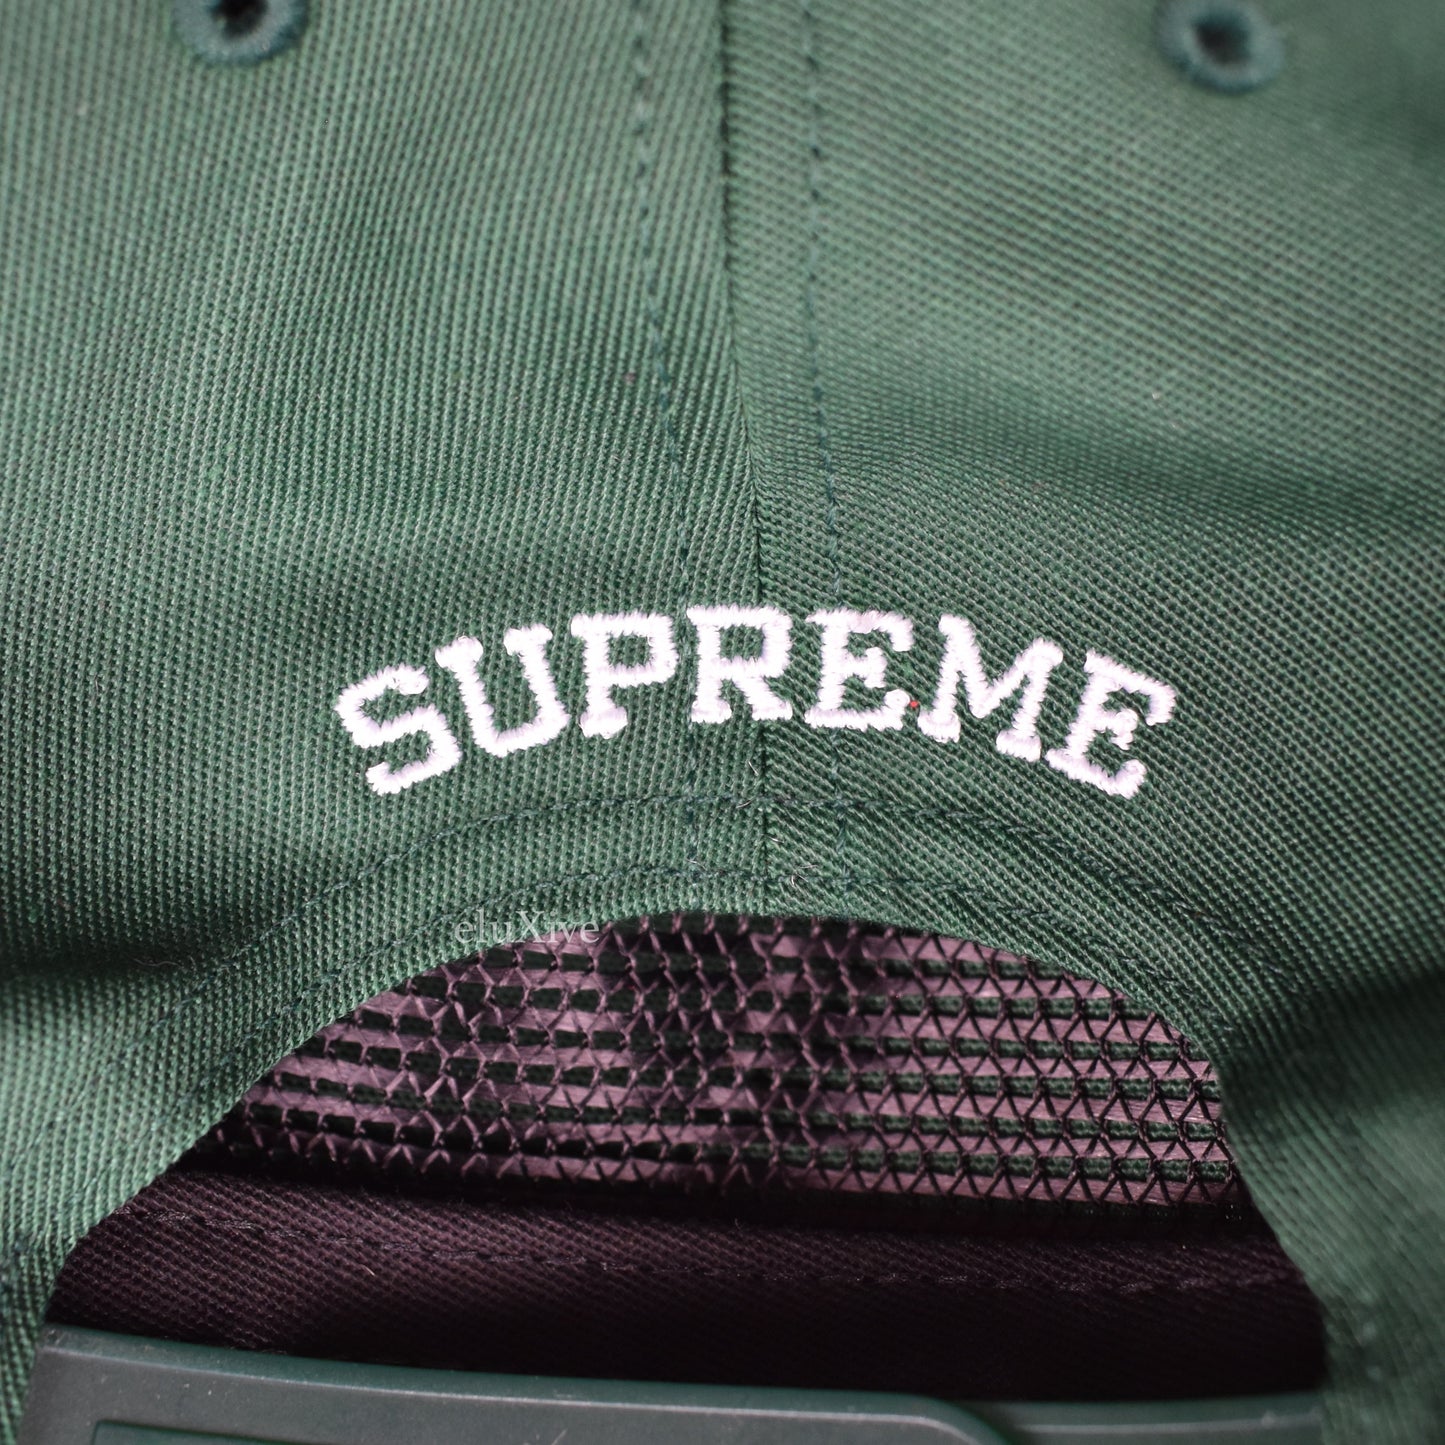 Supreme - Futura Logo Snapback Hat (Green)